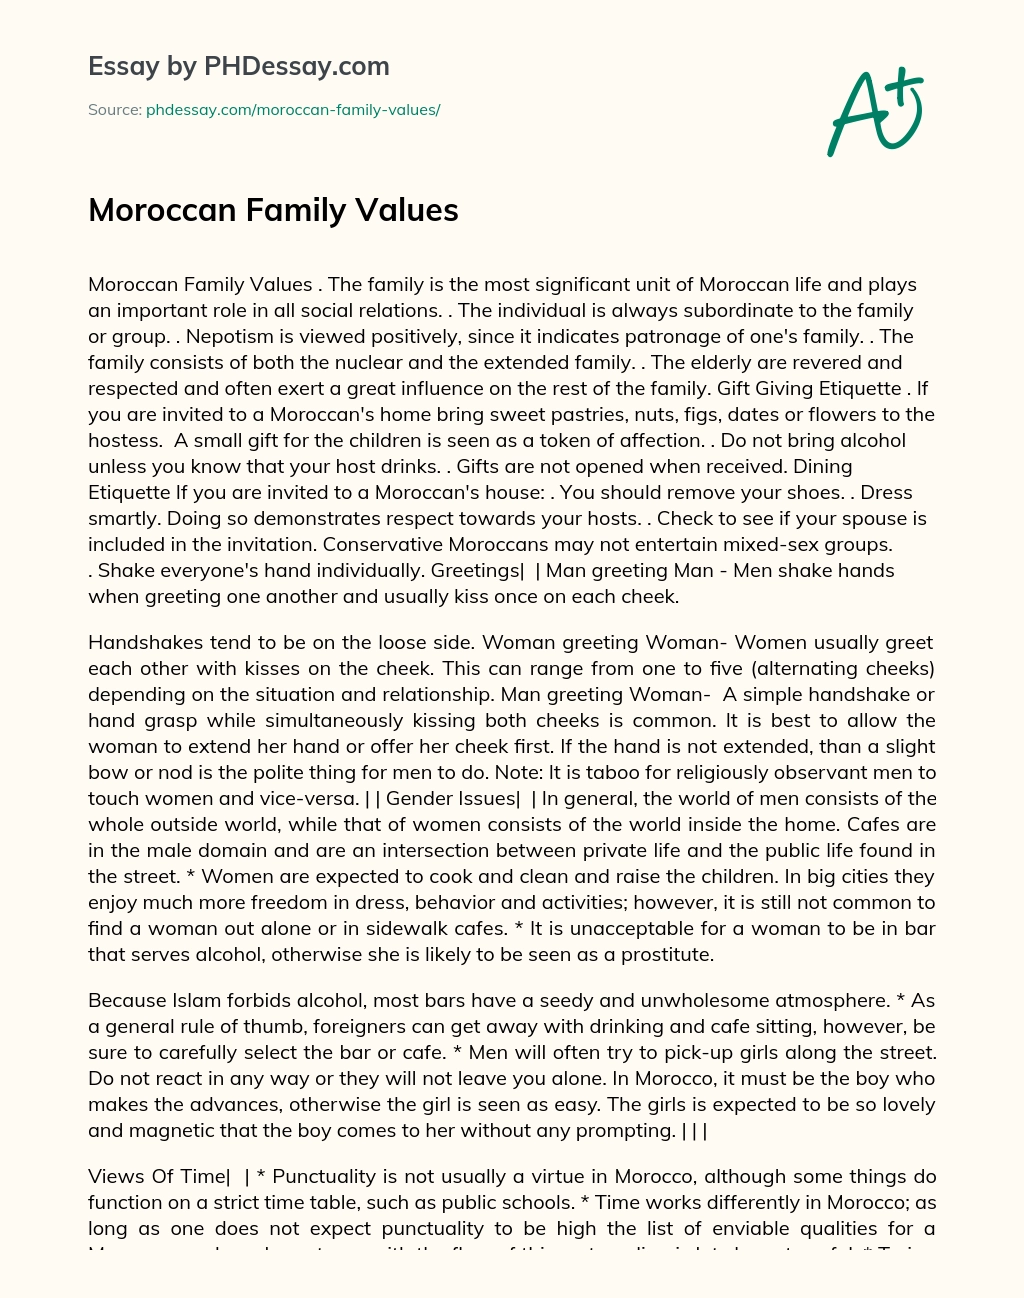 Moroccan Family Values essay